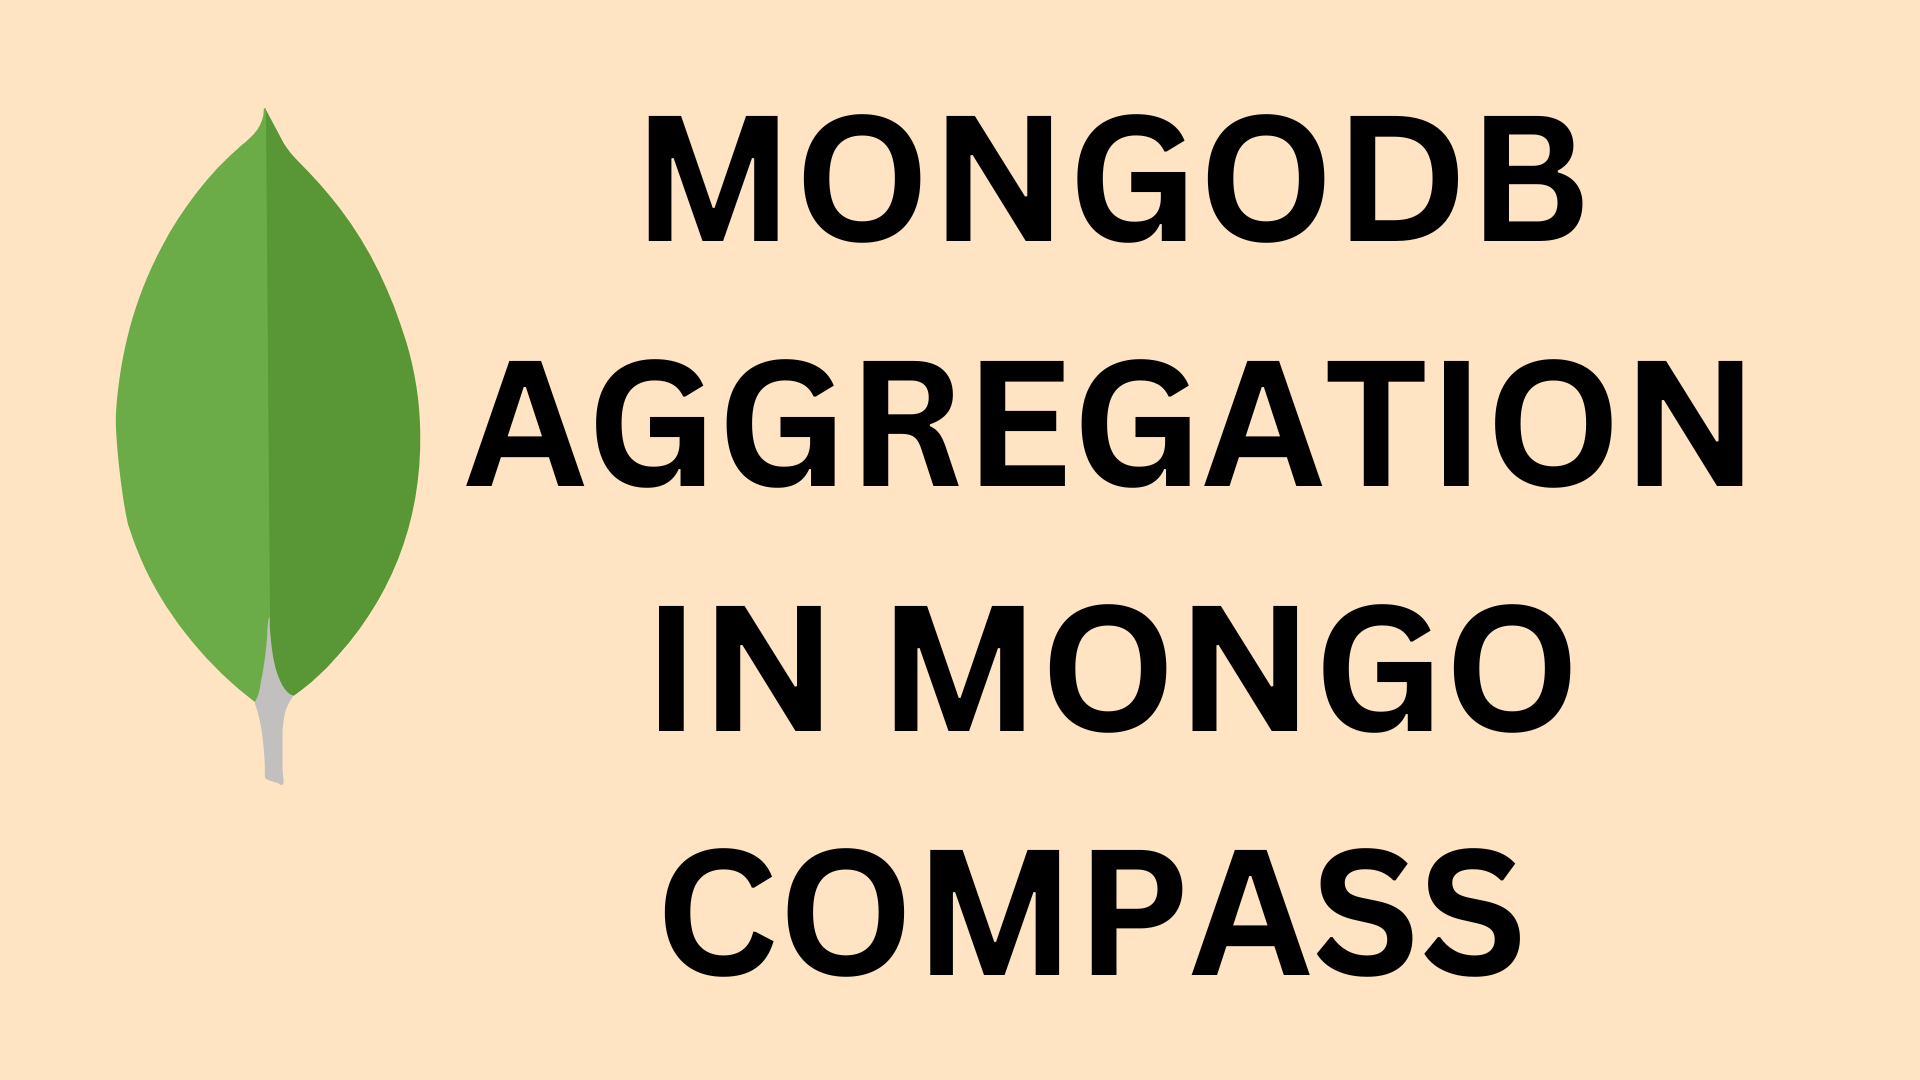 mongodb compass aggregation filter